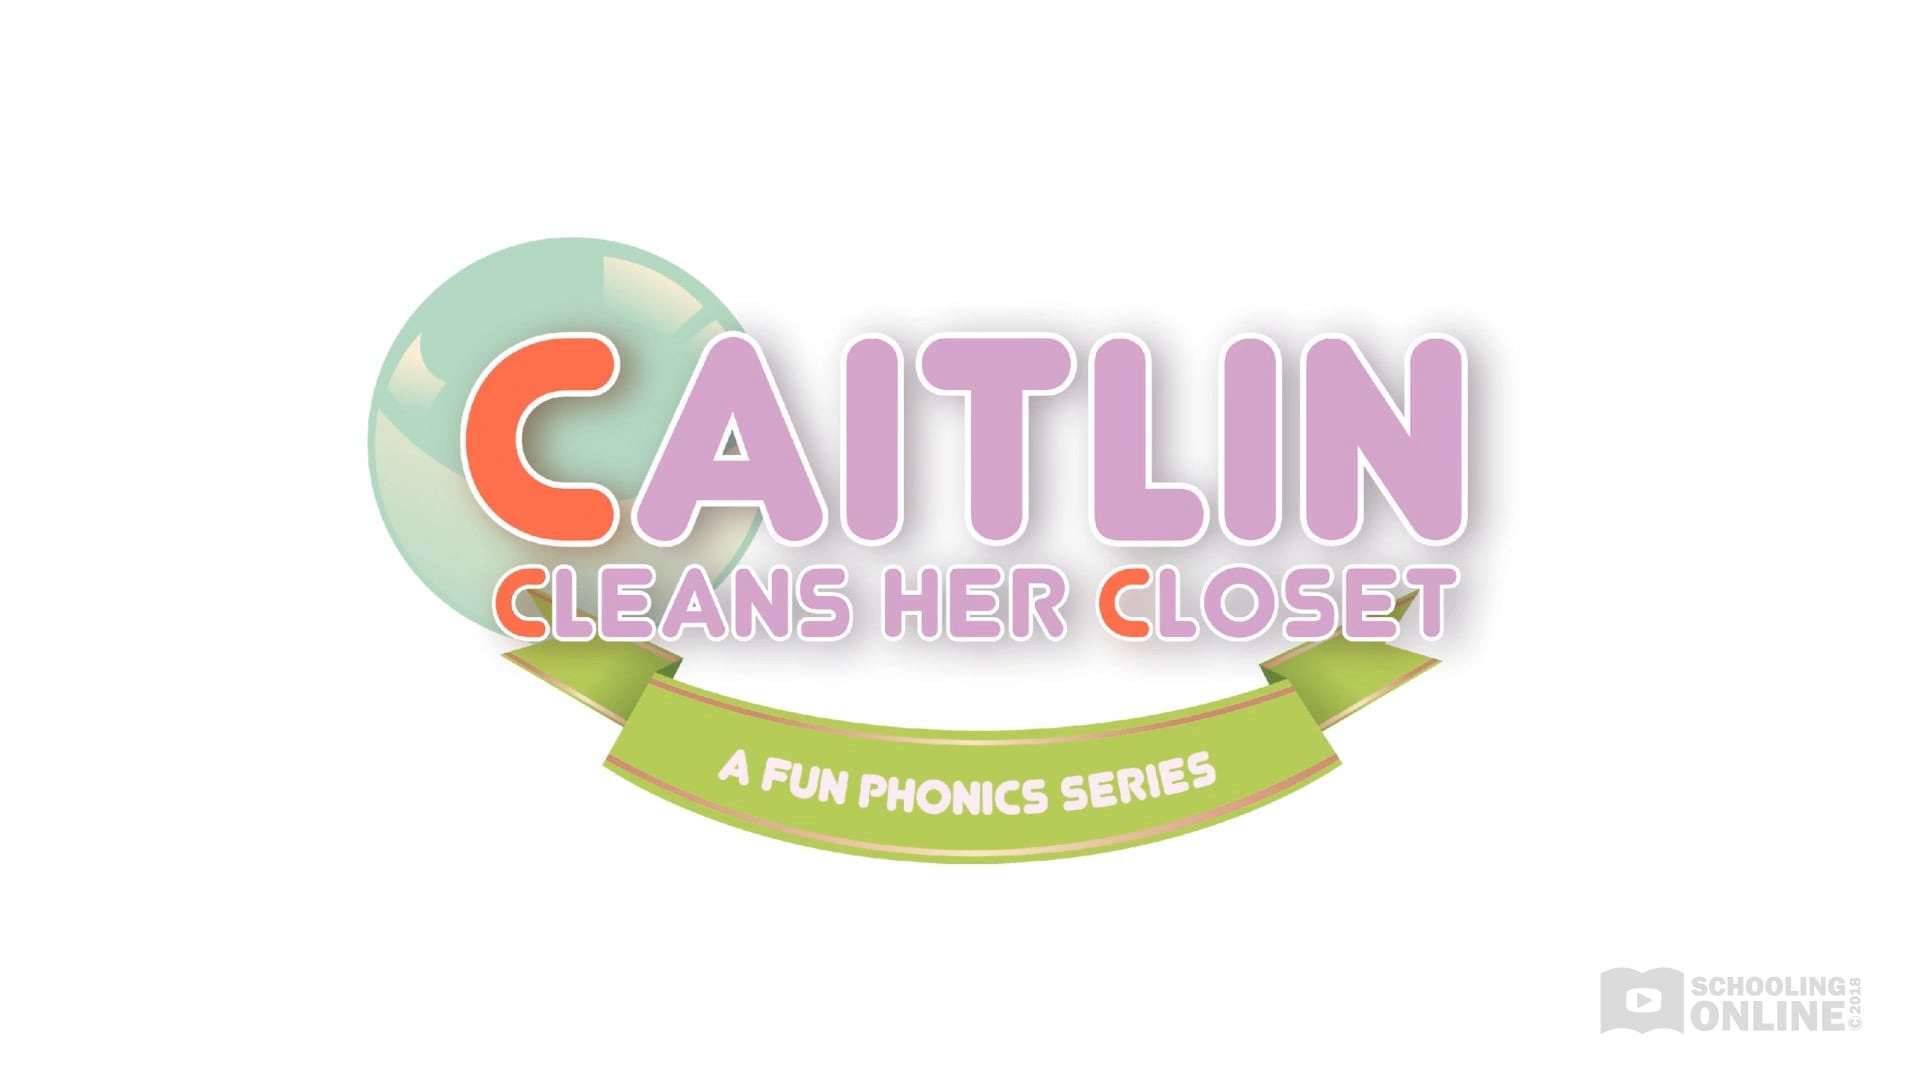 Caitlin Cleans her Closet